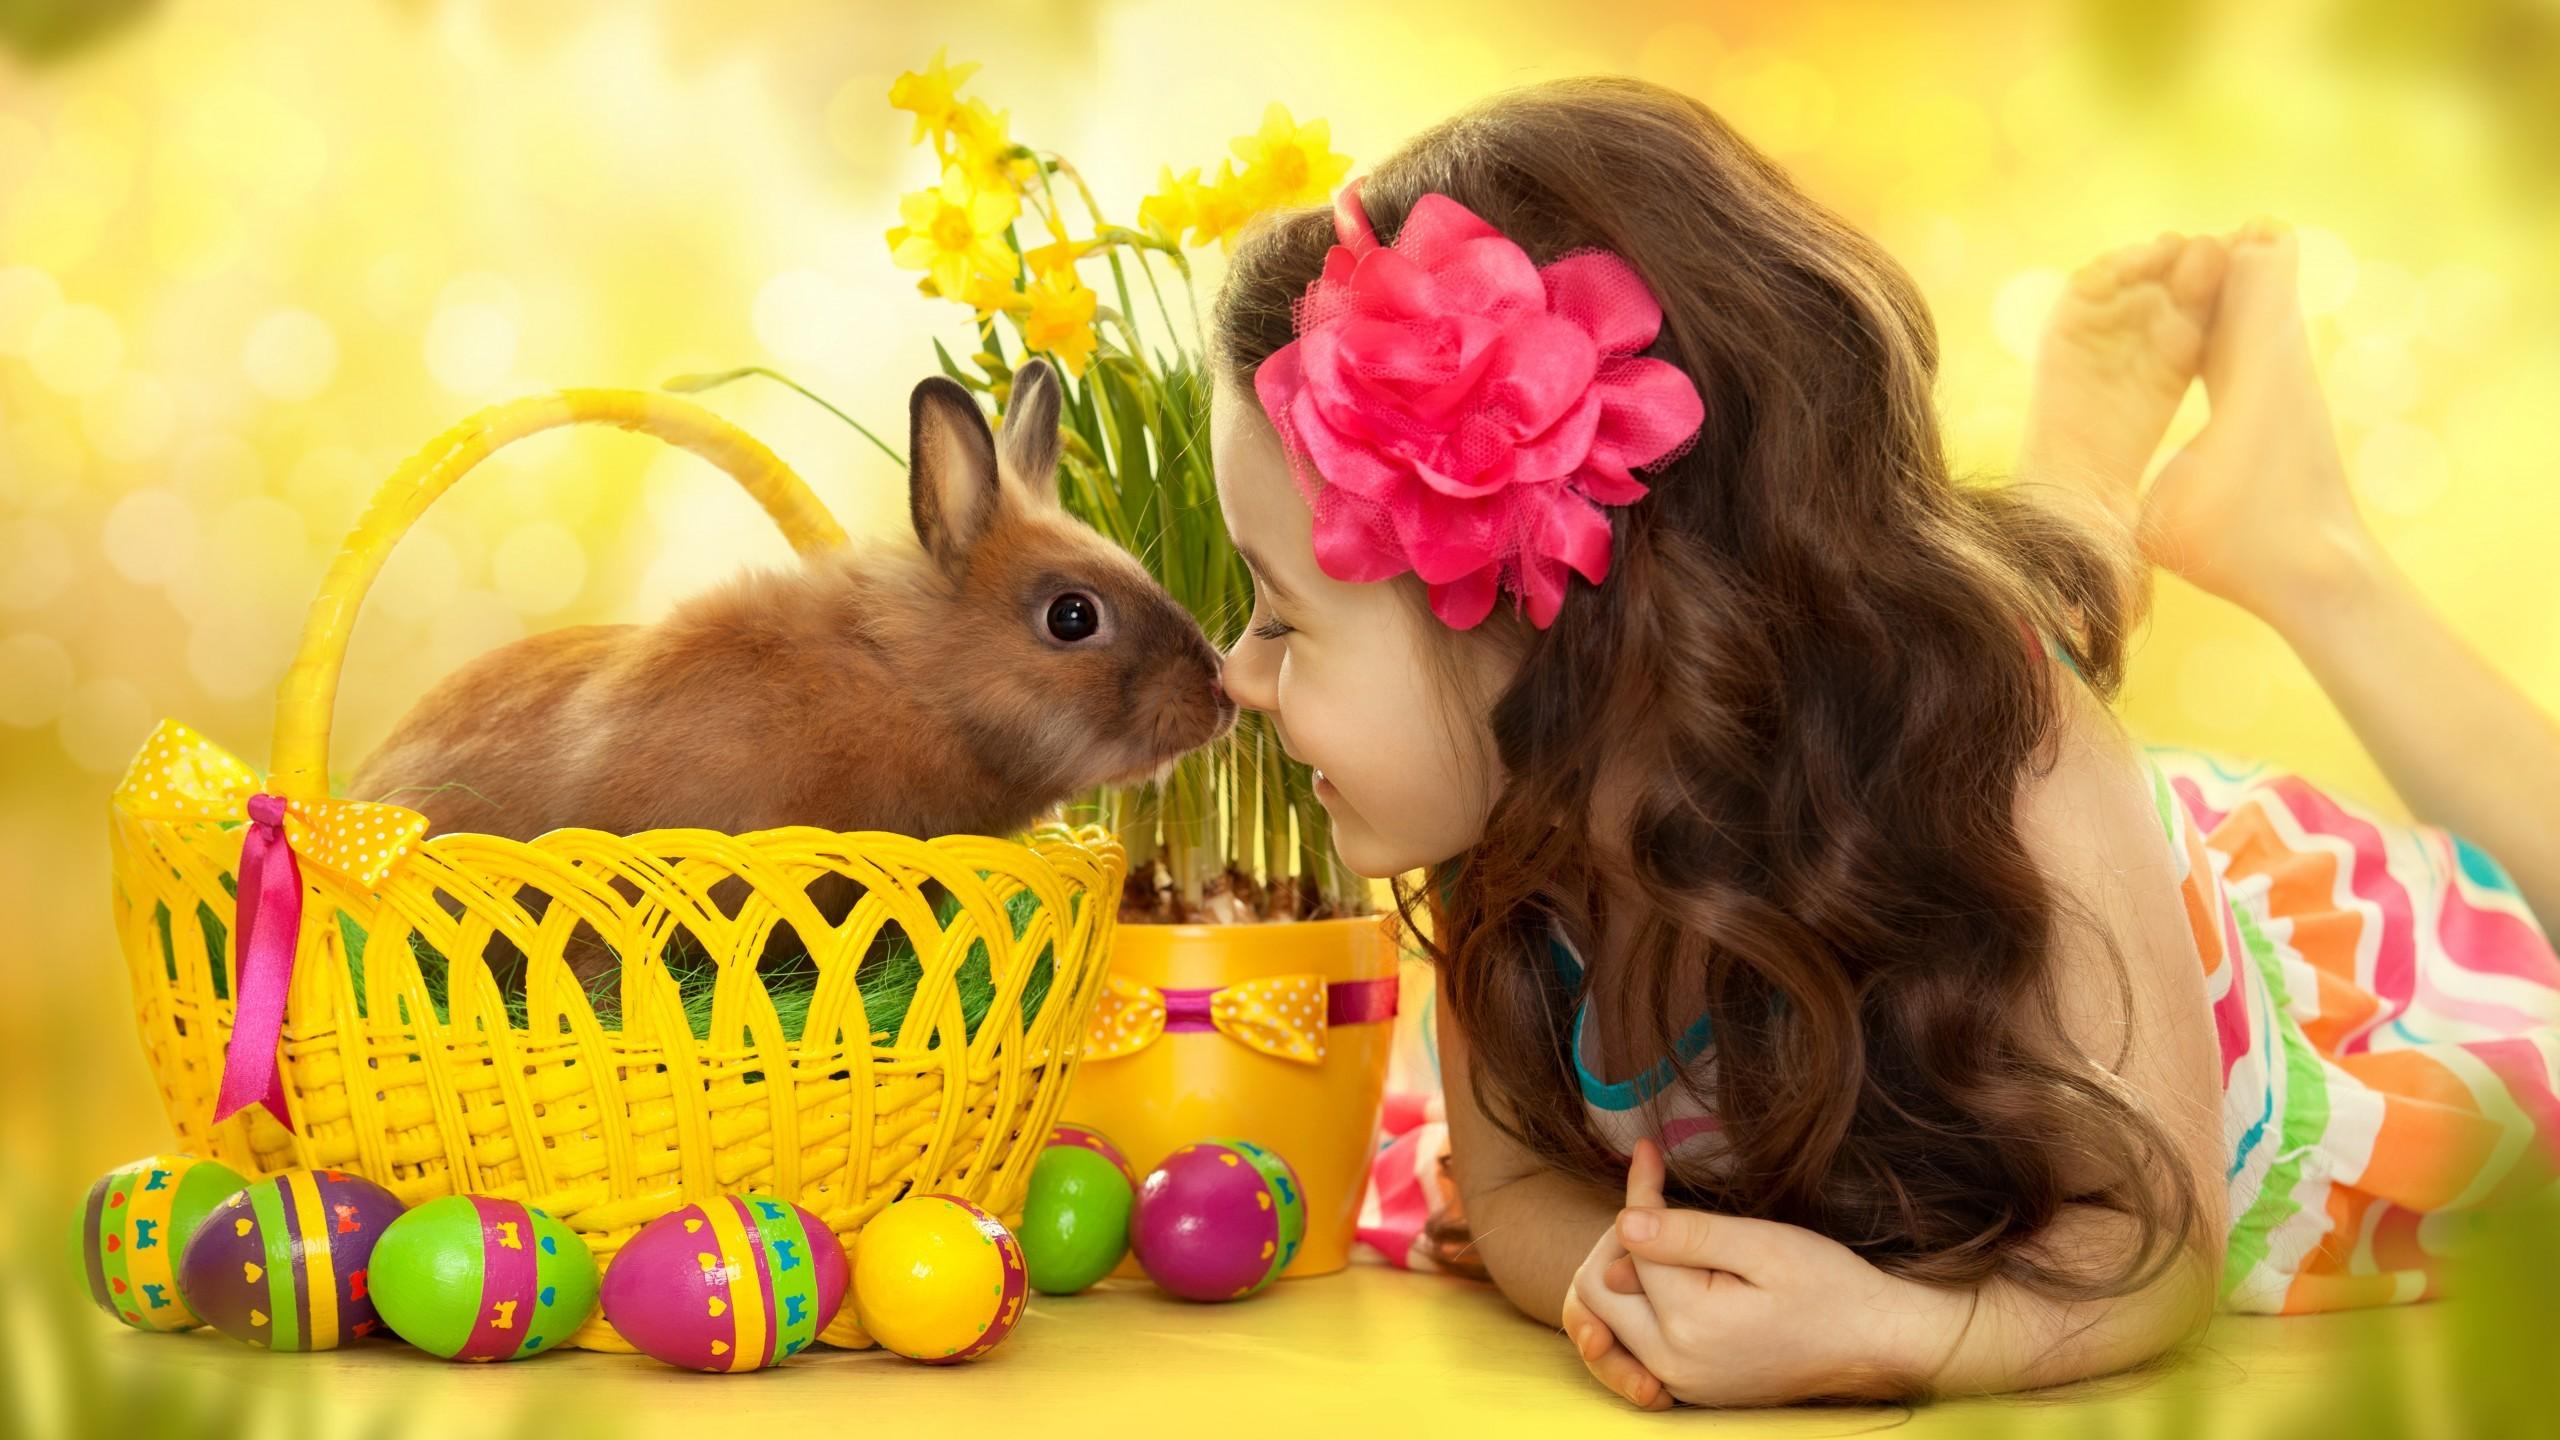 Wallpaper Easter Eggs, Easter Bunny, Cute girl, HD, Celebrations